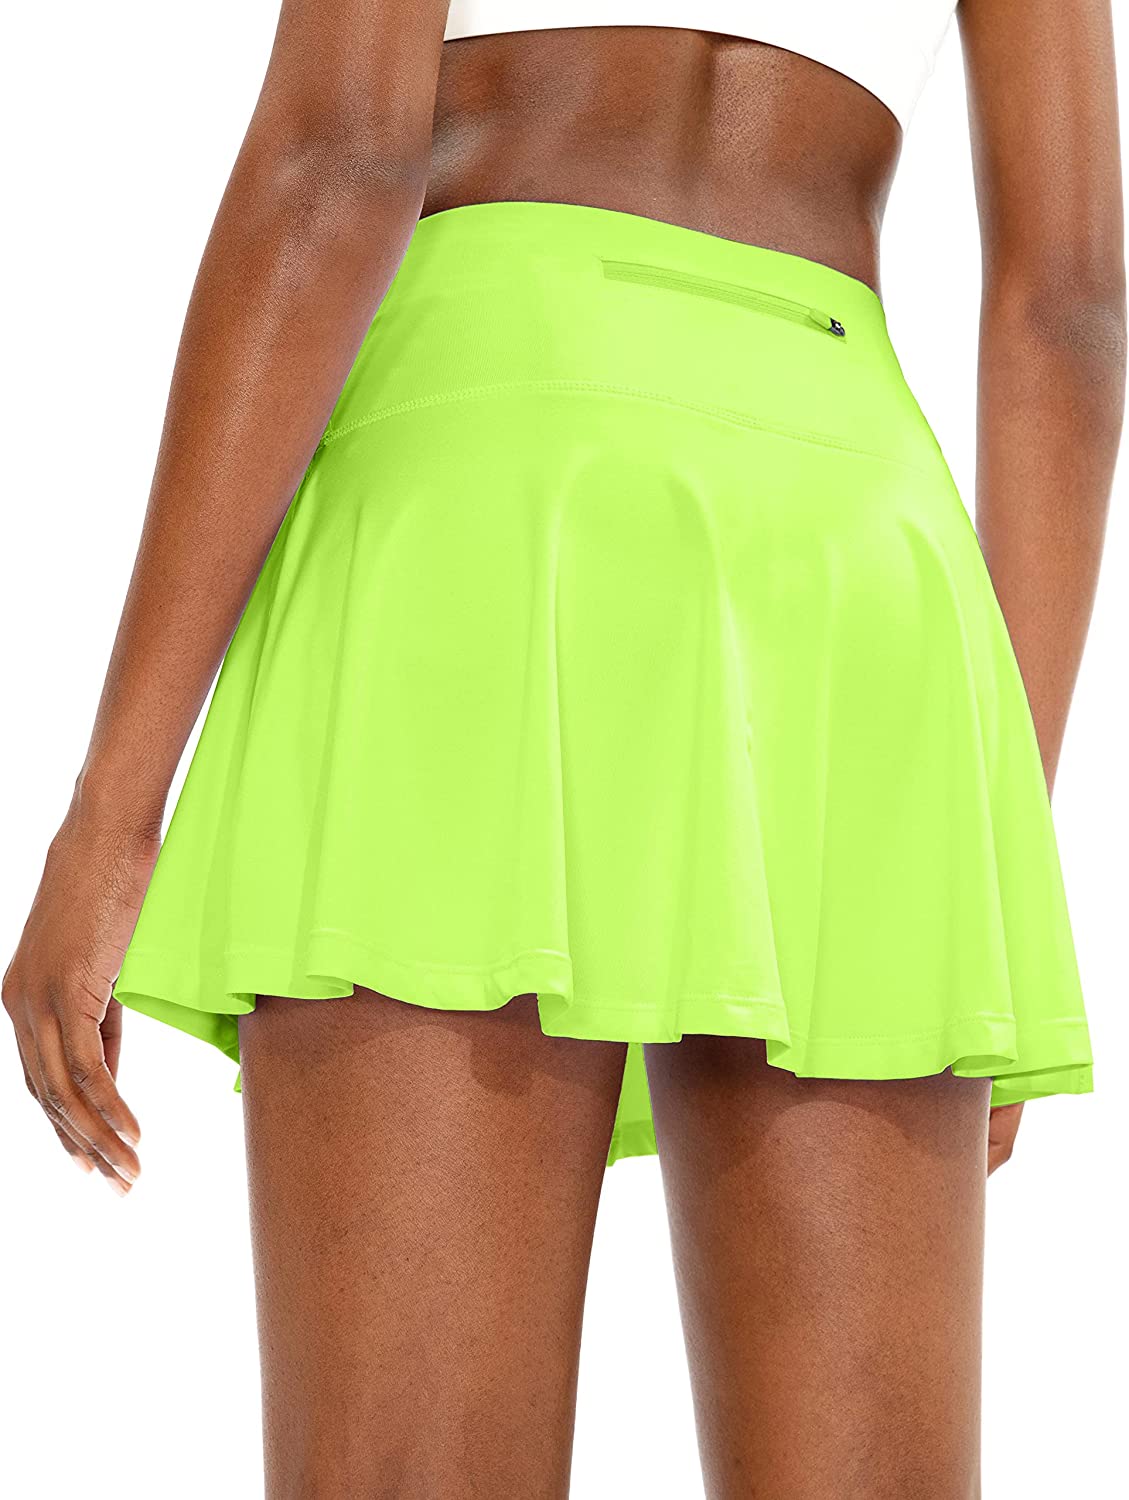 SANTINY 16 Golf Skorts Skirts for Women Zipper Pockets Women's High  Waisted Tennis Skirt Athletic Skort